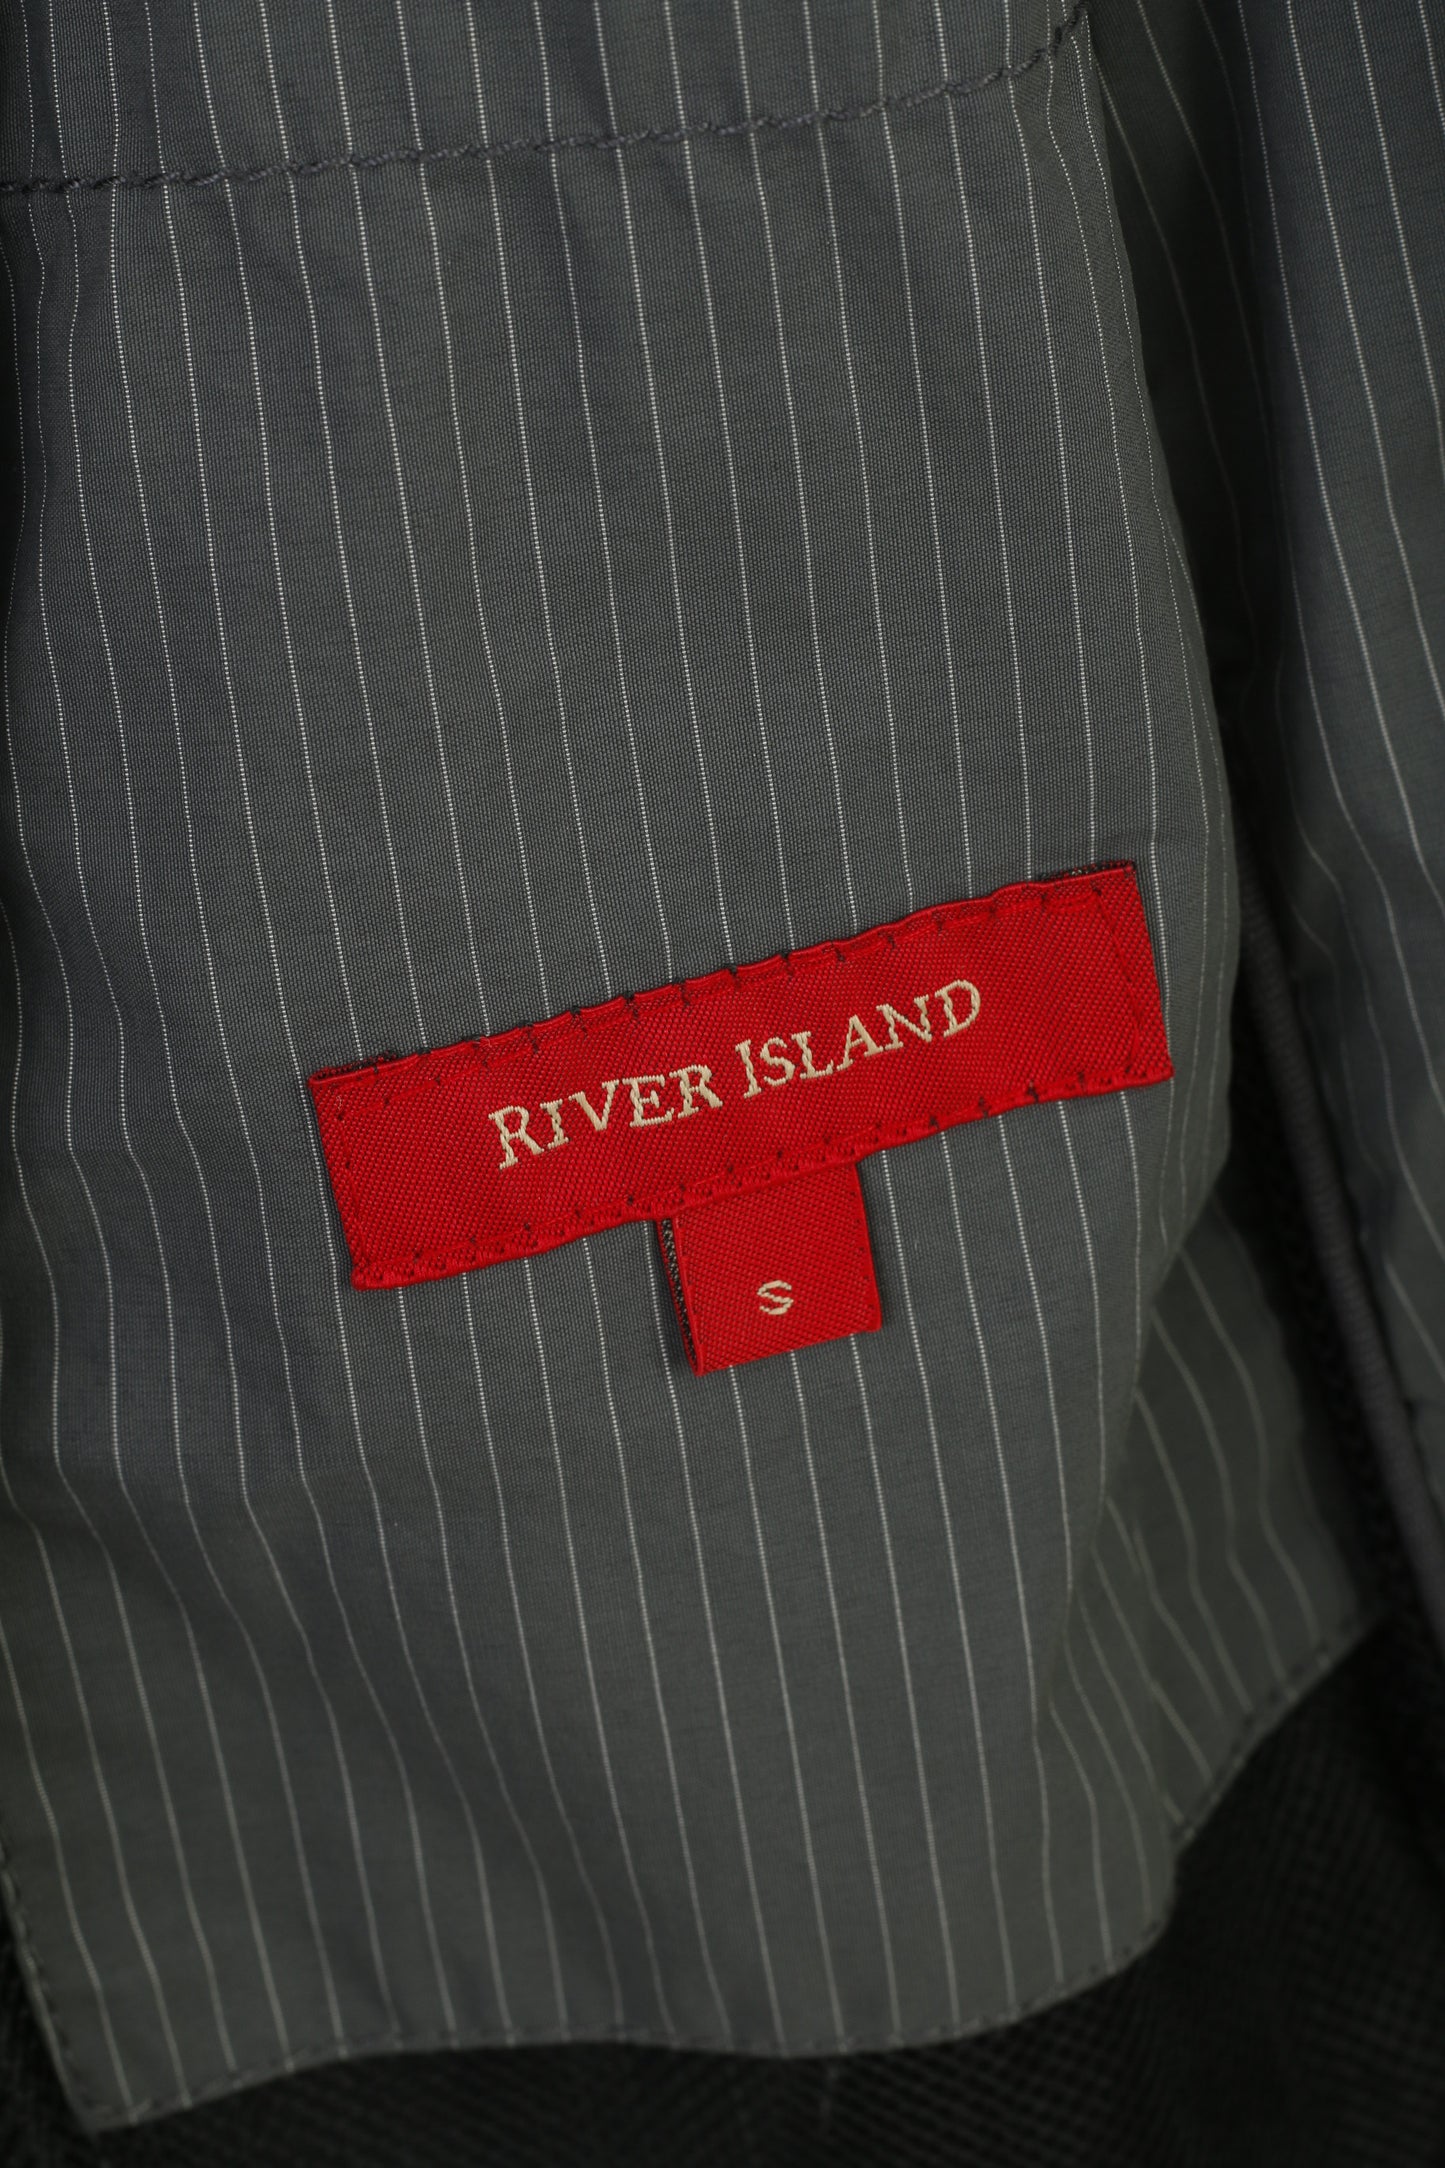 River Island Men S Jacket Hood Striped Nylon Waterproof Full Zipper Engineered Design Vintage Pockets Top